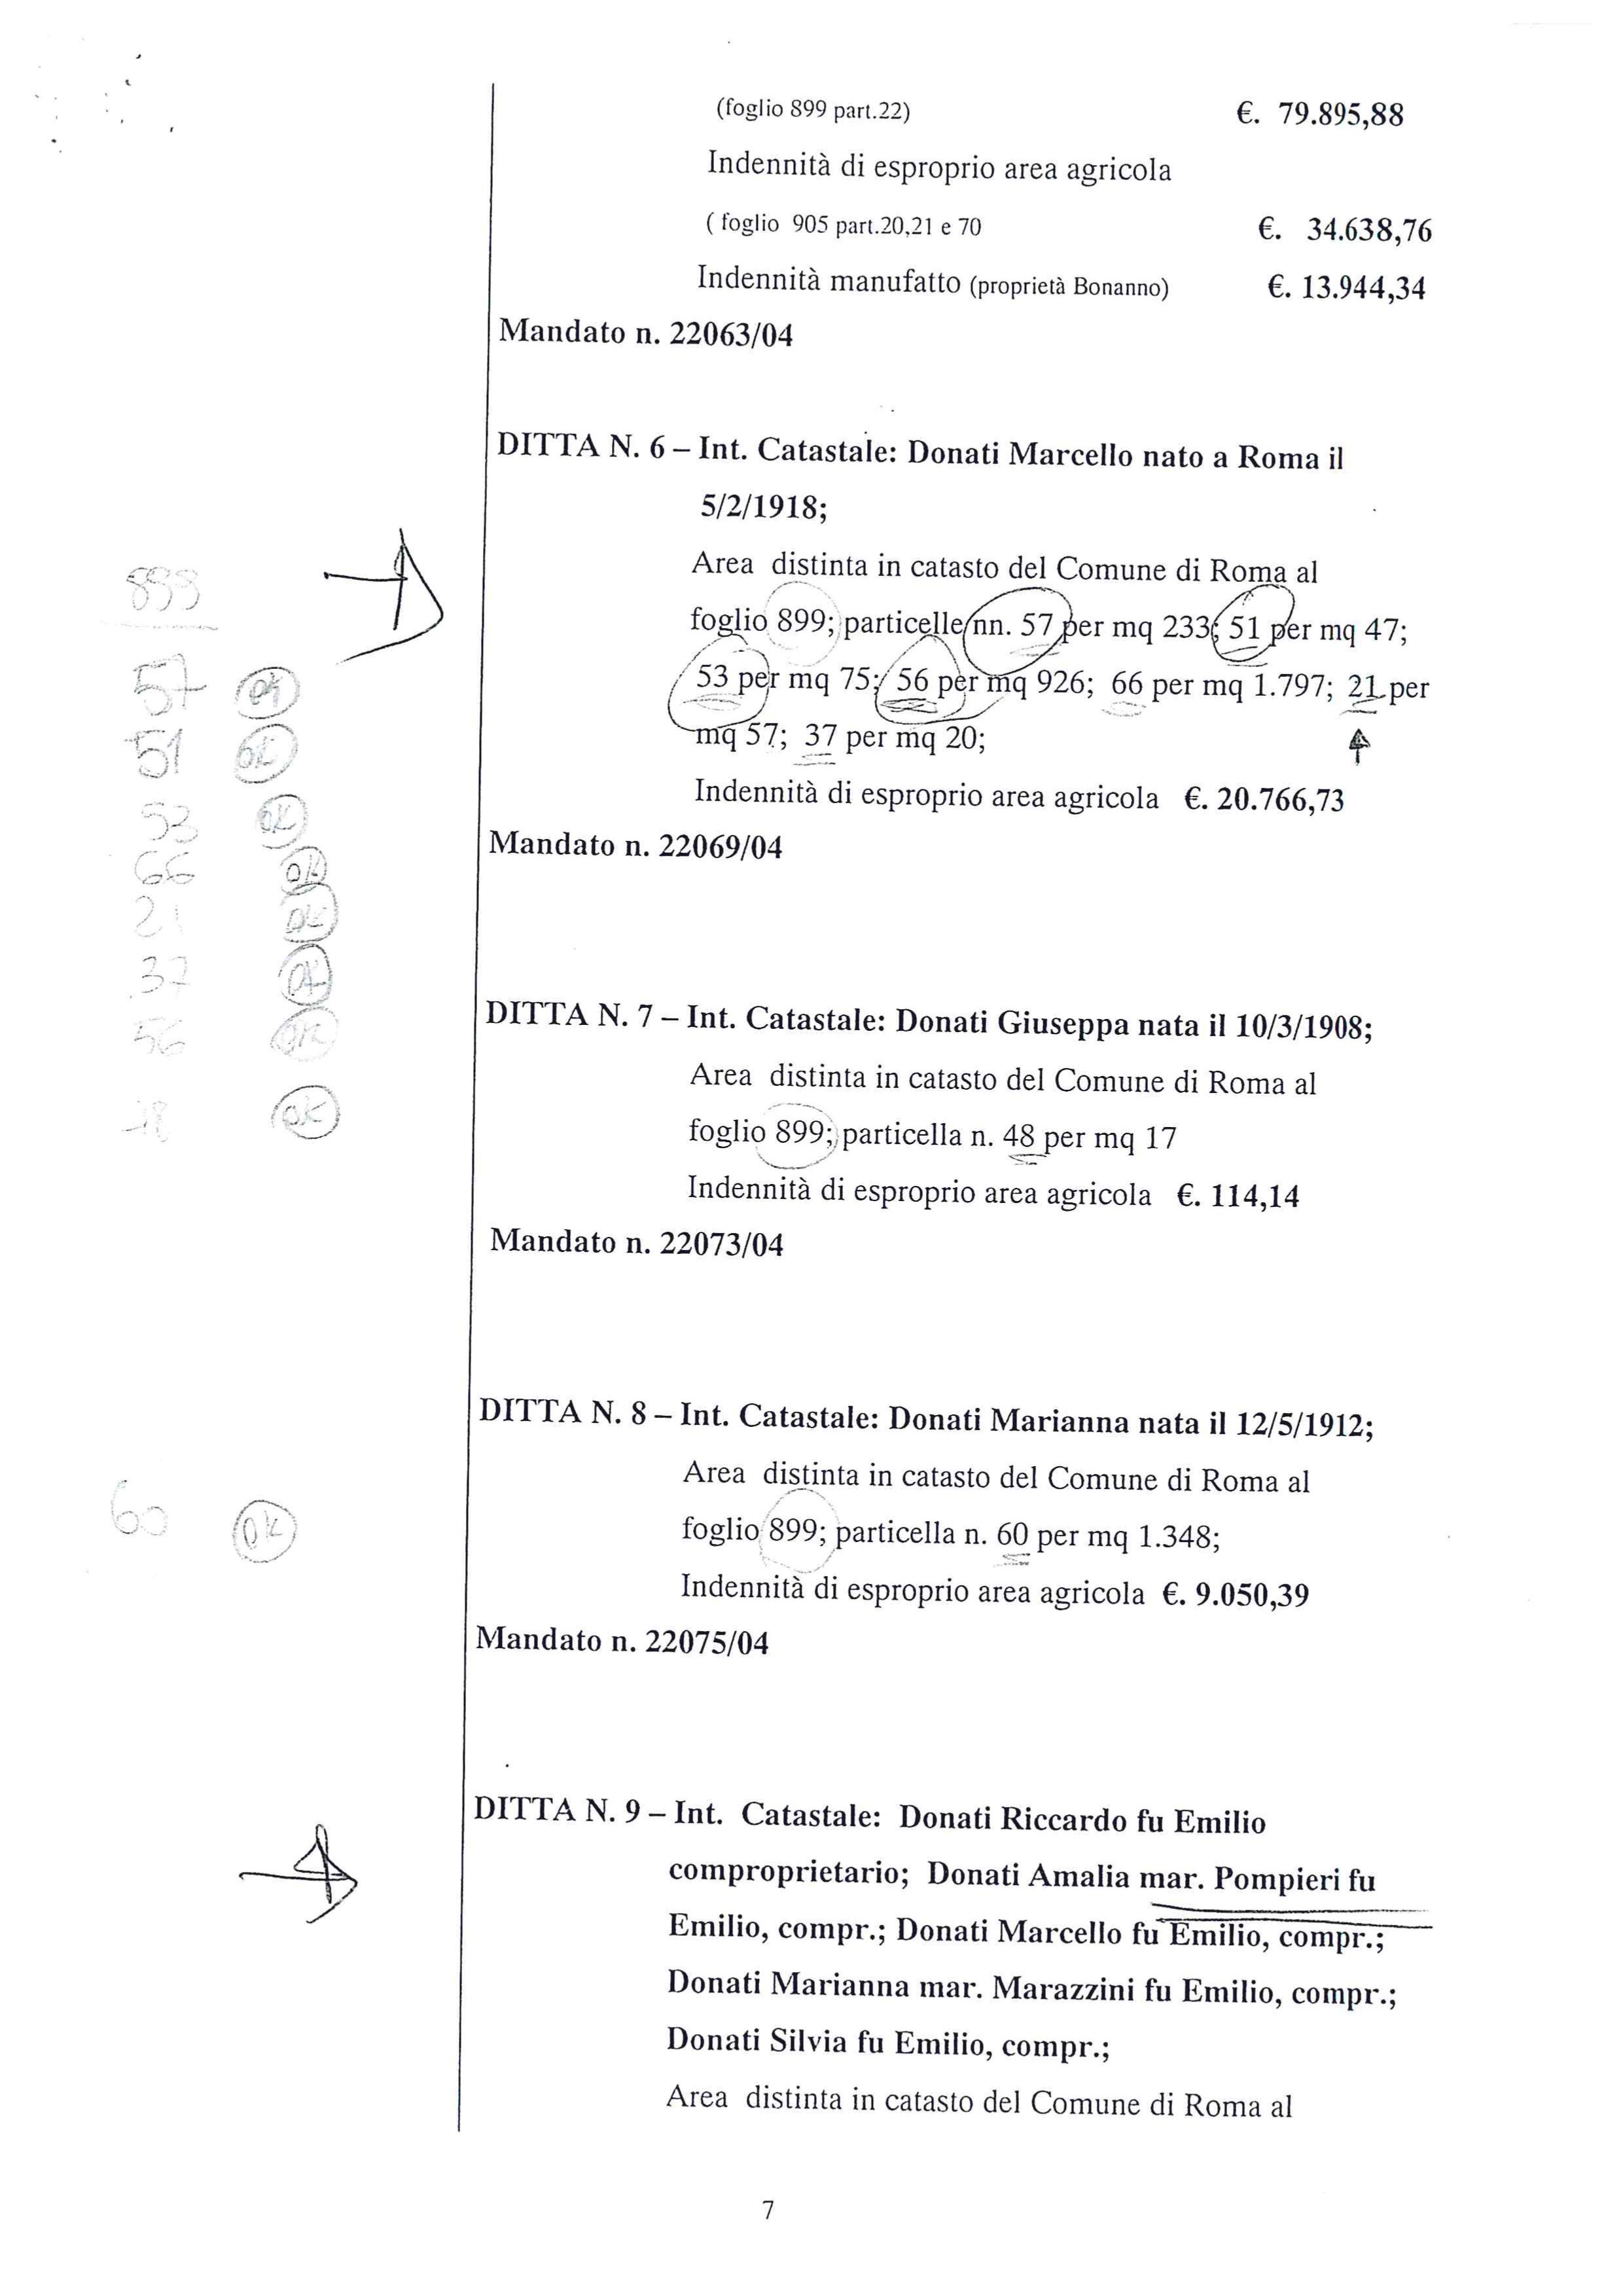 2005 Decreto esproprio Veltroni 14